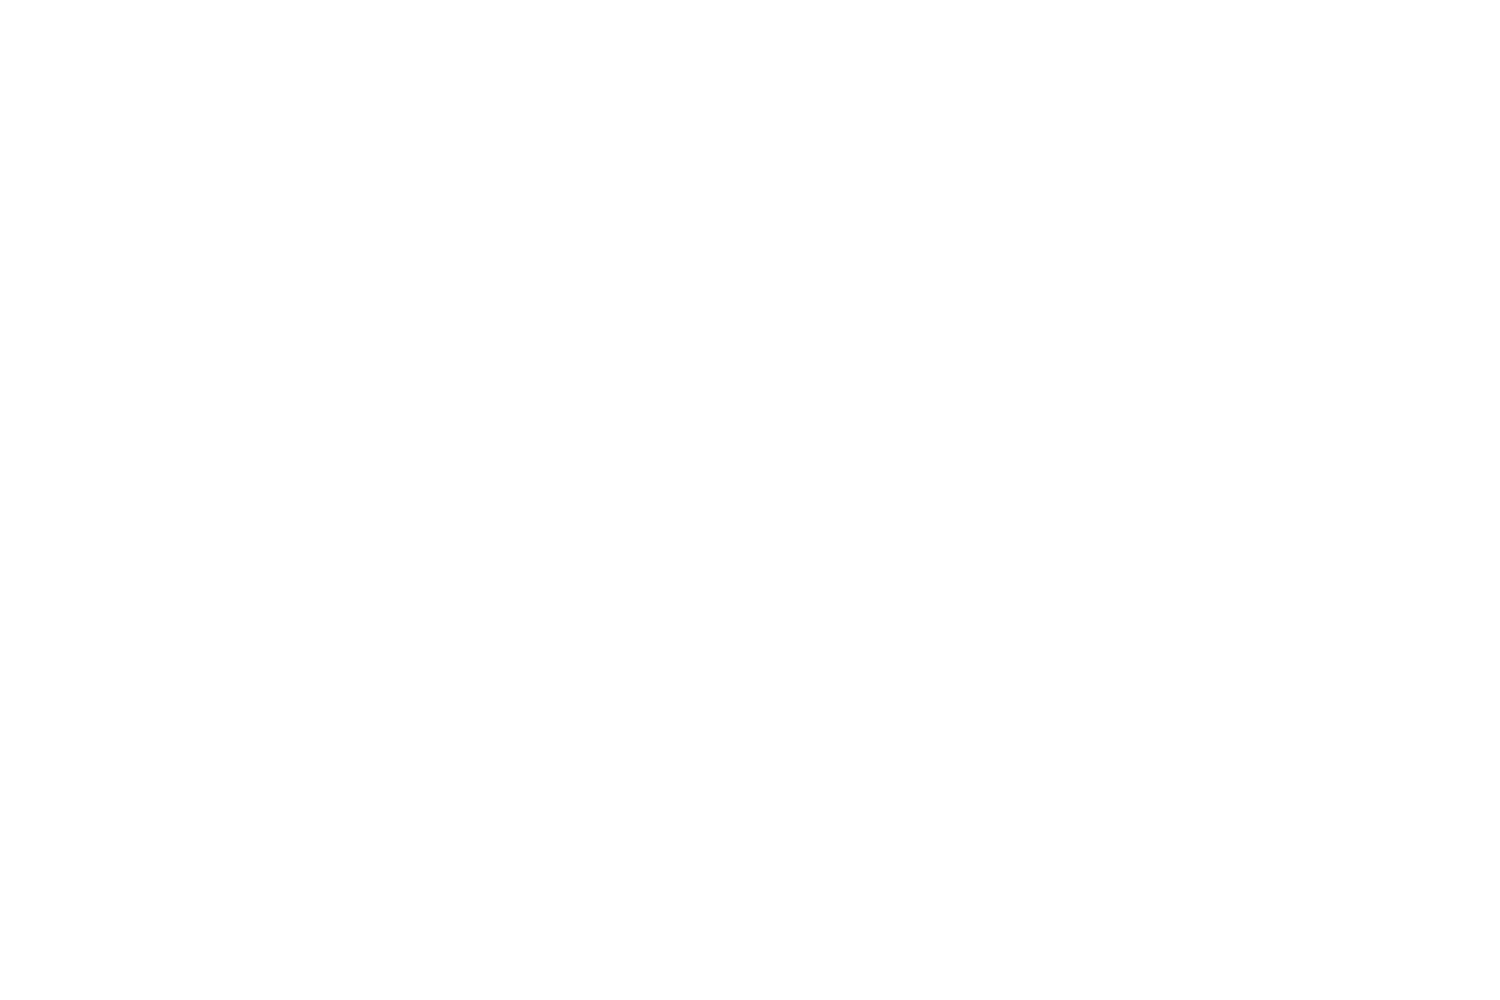 Andrew Axenov